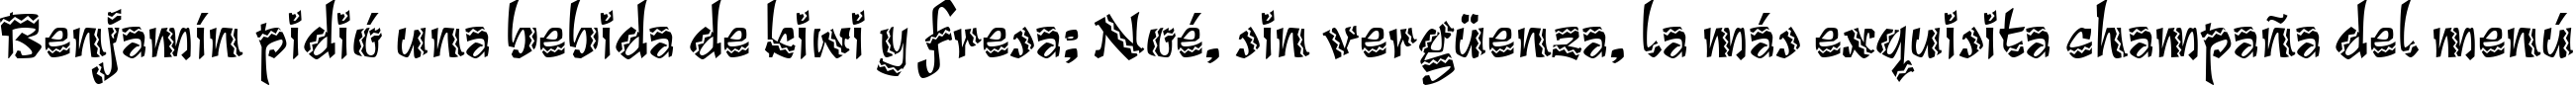 Пример написания шрифтом Arriba Arriba LET Plain:1.0 текста на испанском